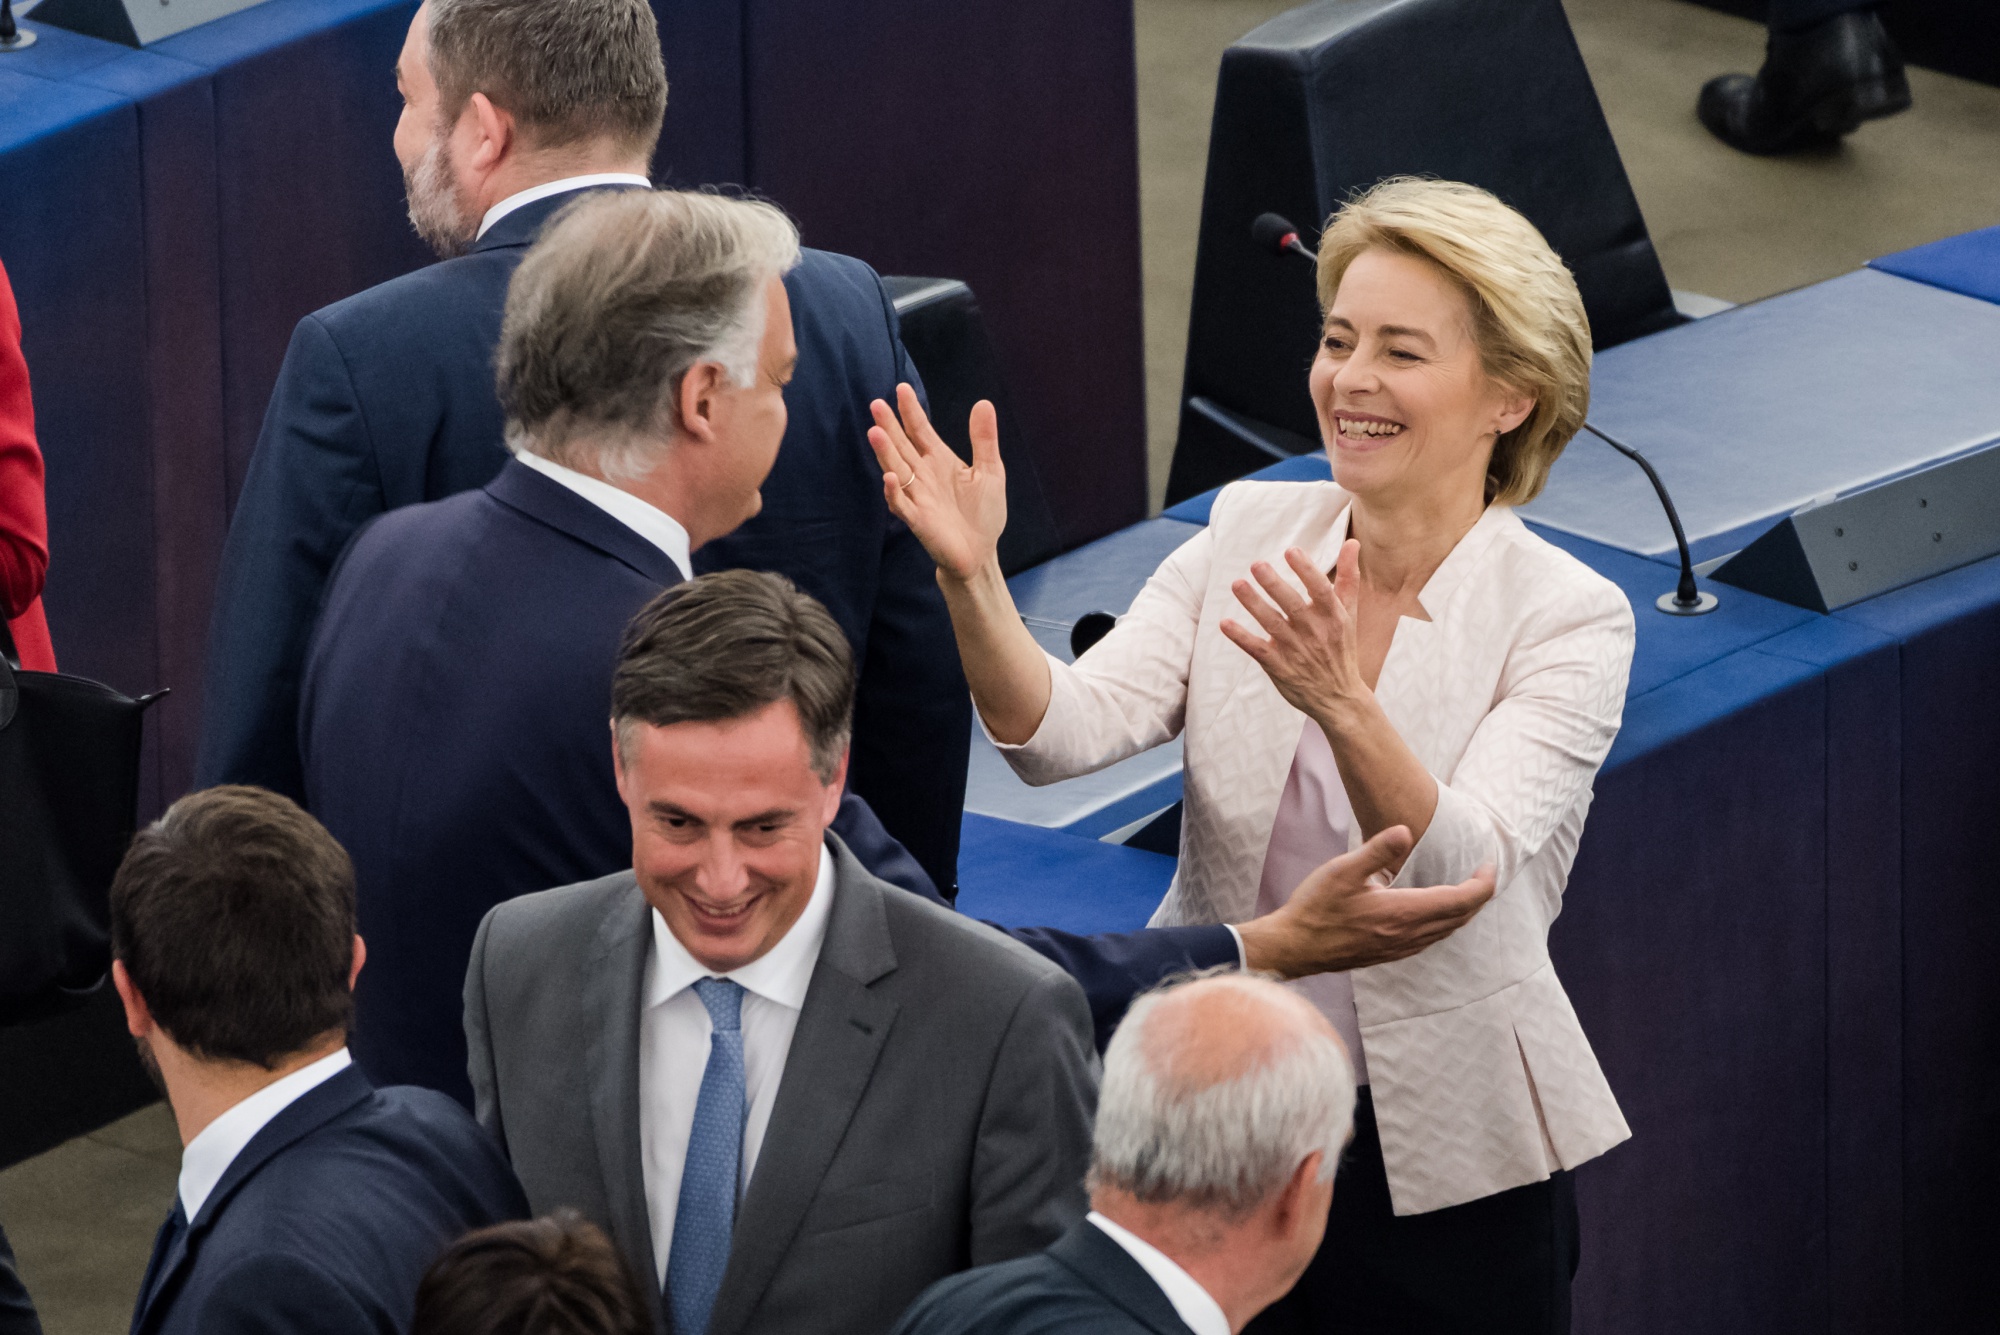 Ursula von der Leyen reacts as election results are announced.